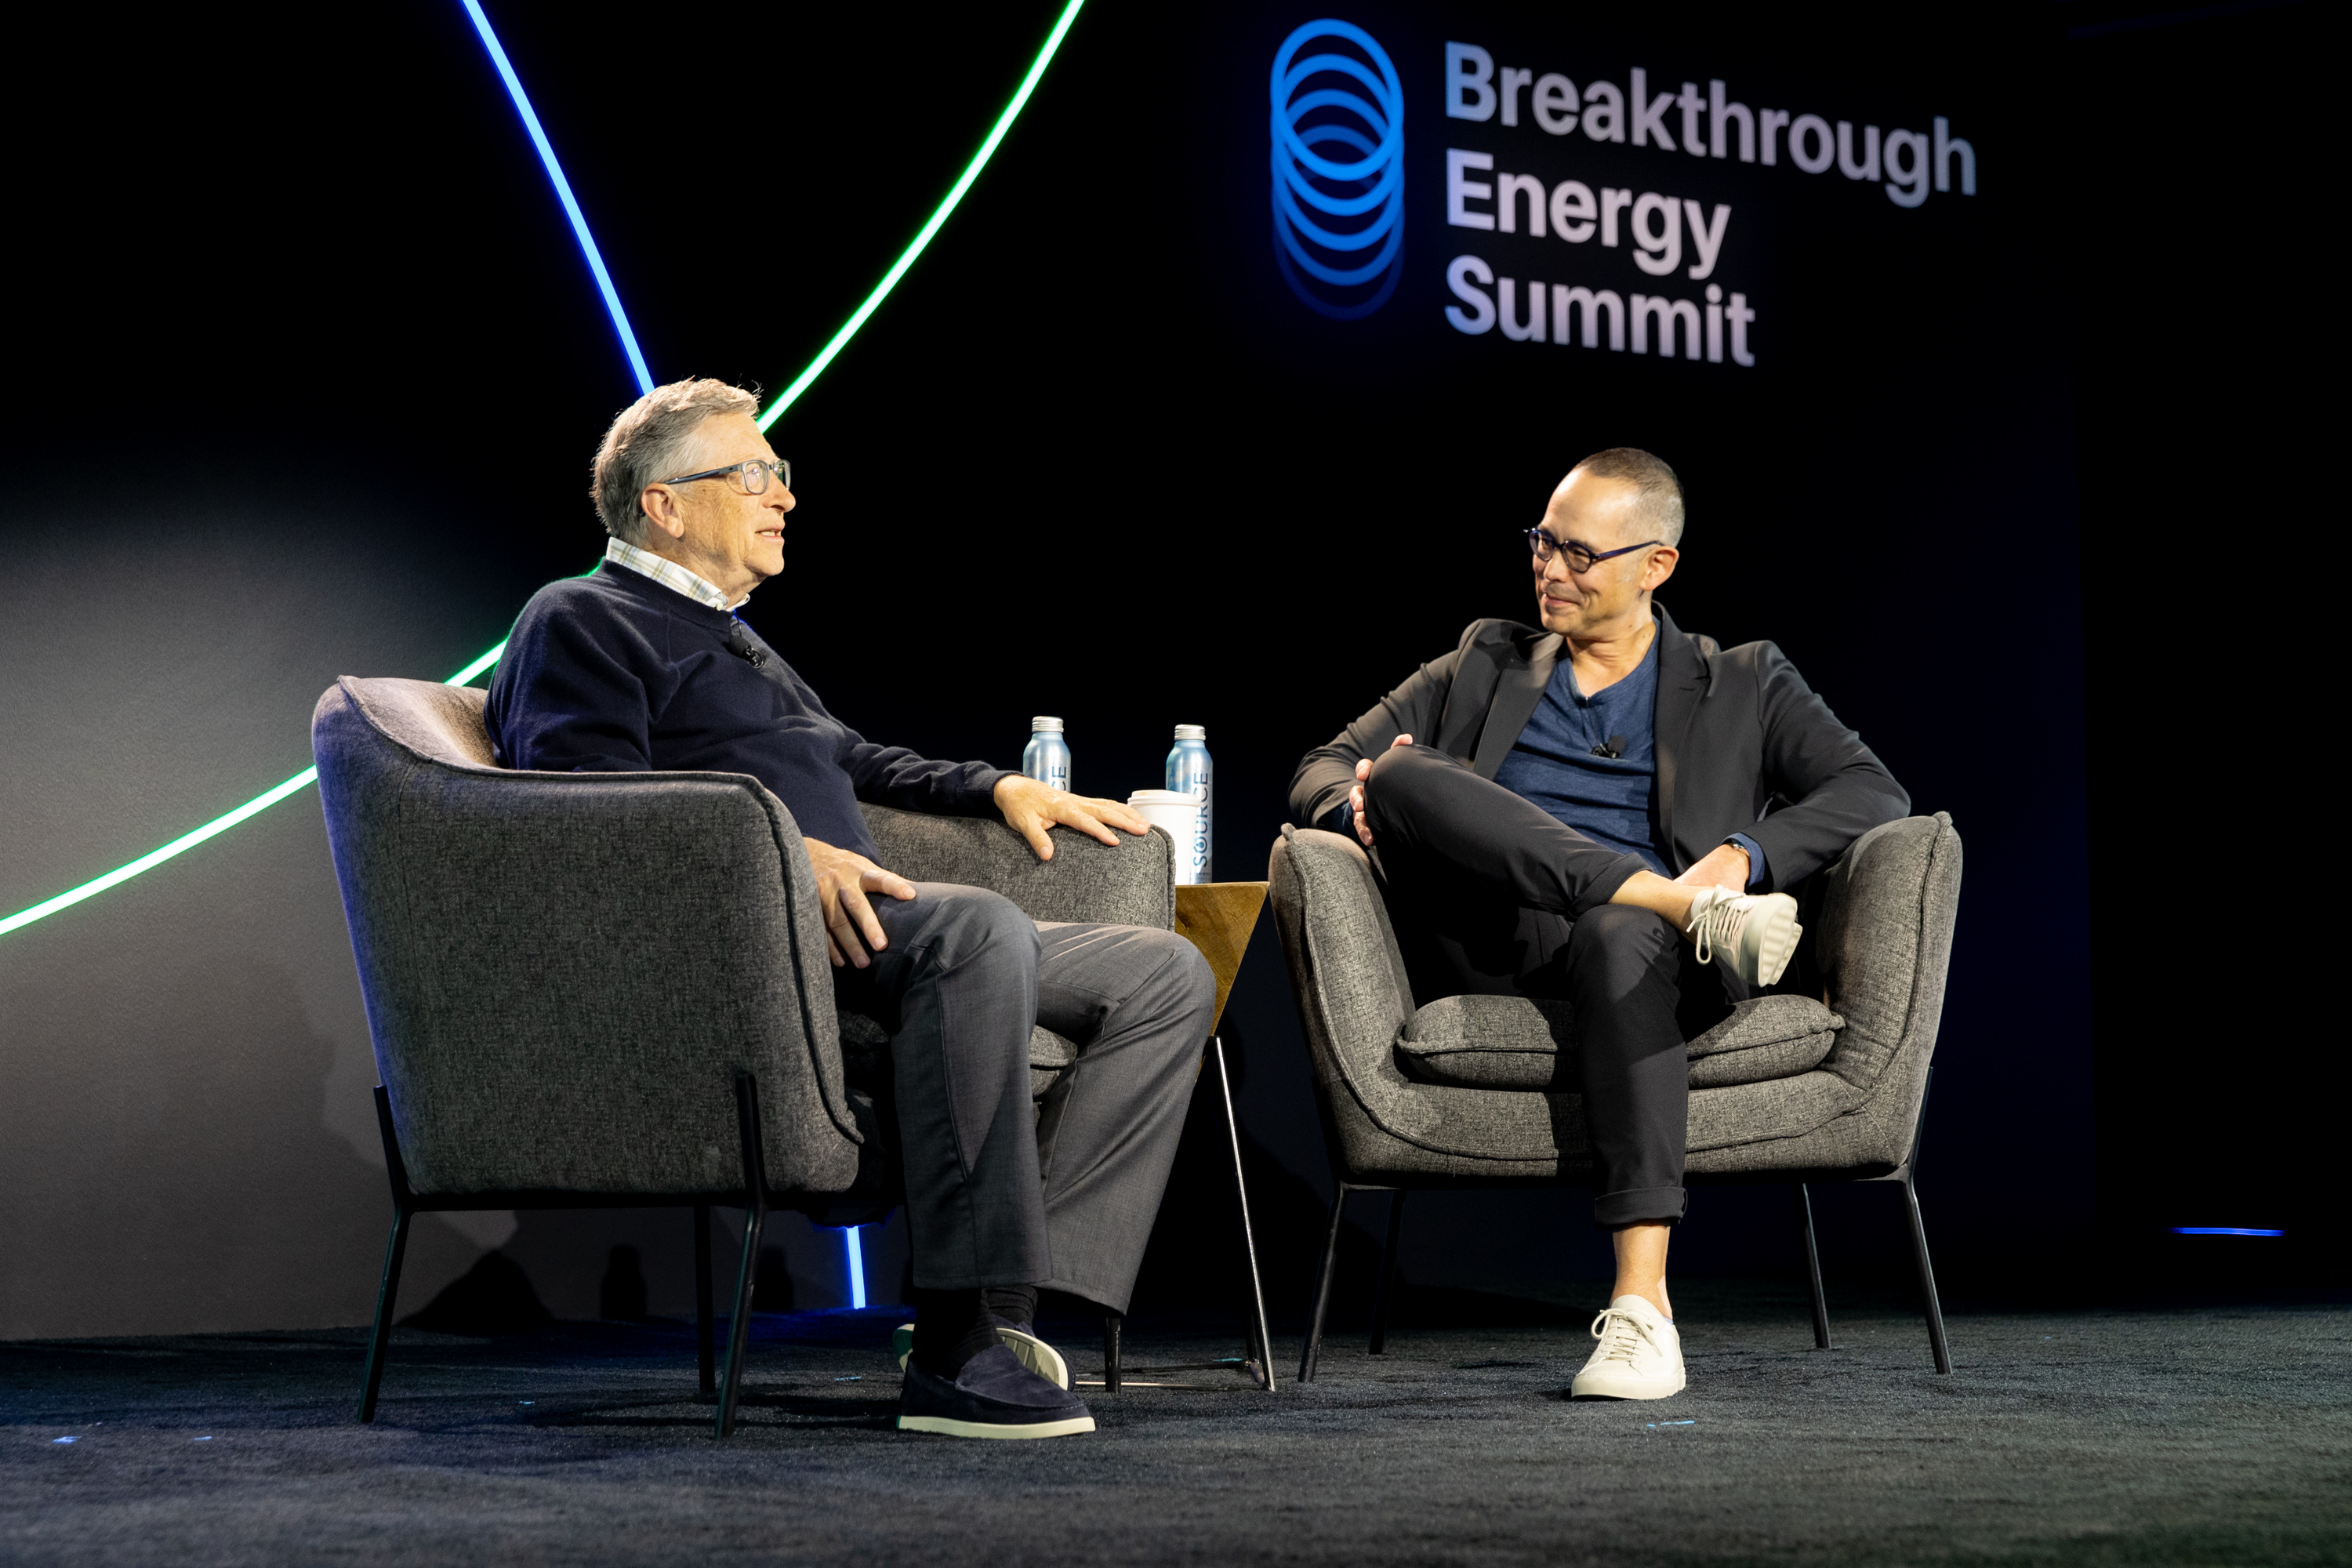 Bill Gates at the Breakthrough Energy Summit